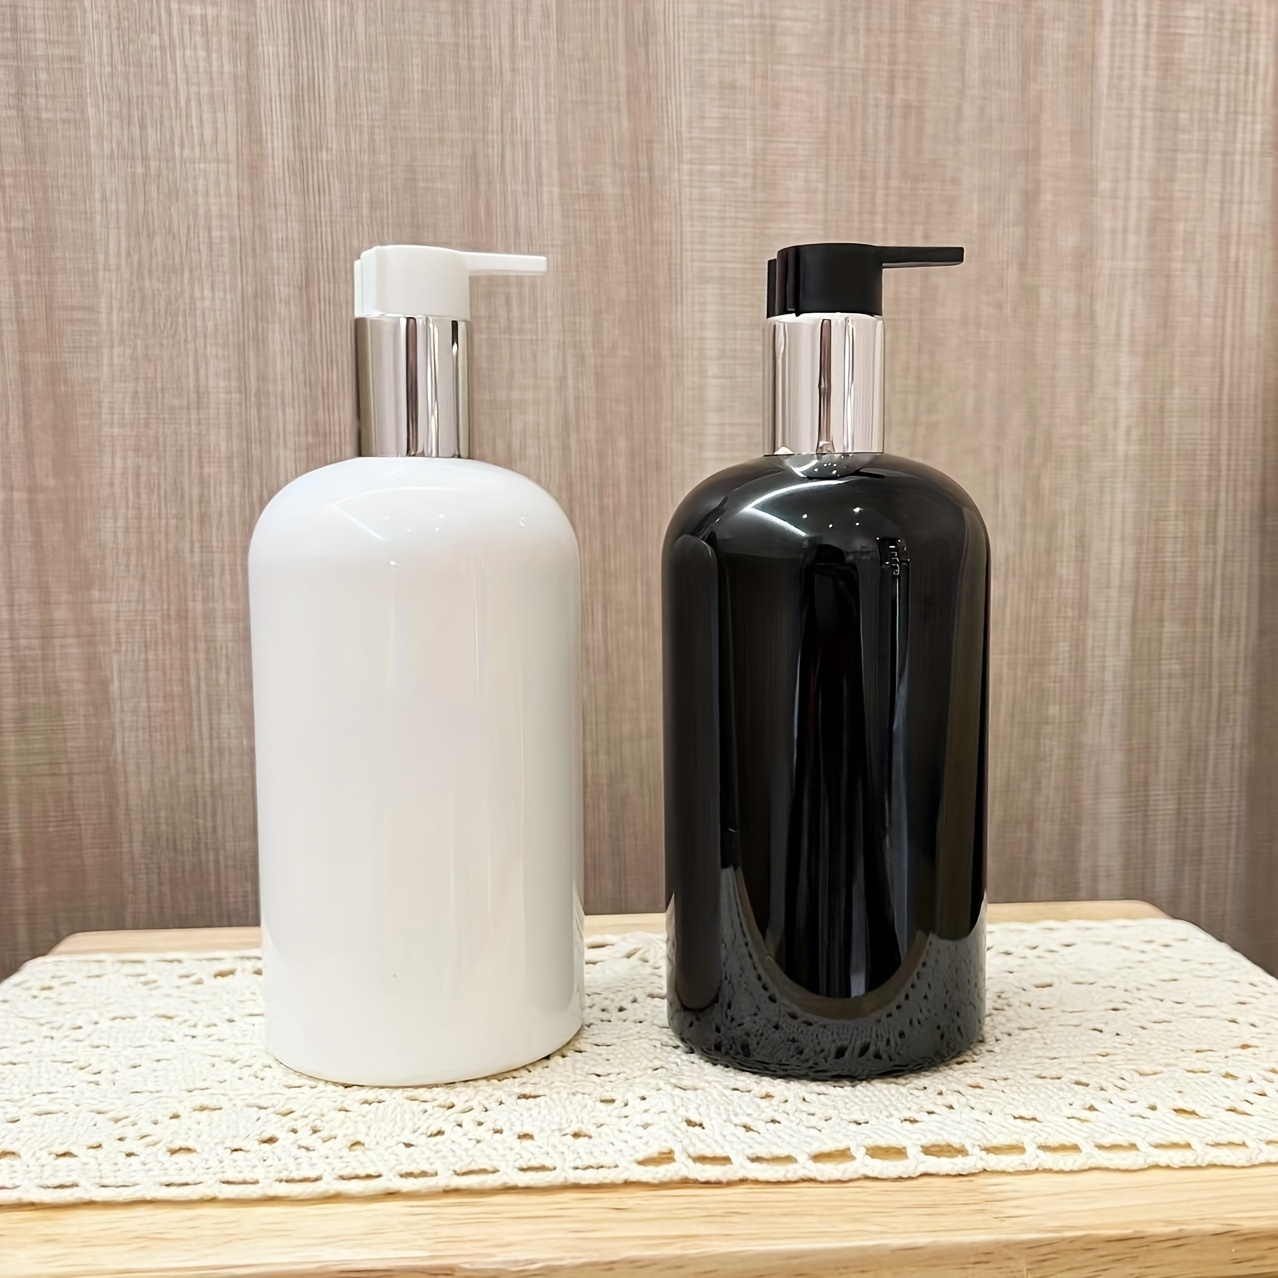 

Empty Soap Dispenser Bottle, 500ml Refillable Dispenser Bottle With Pump For Lotion, Shower Gel, Shampoo And Conditioner Bottles For Bathroom Hotel